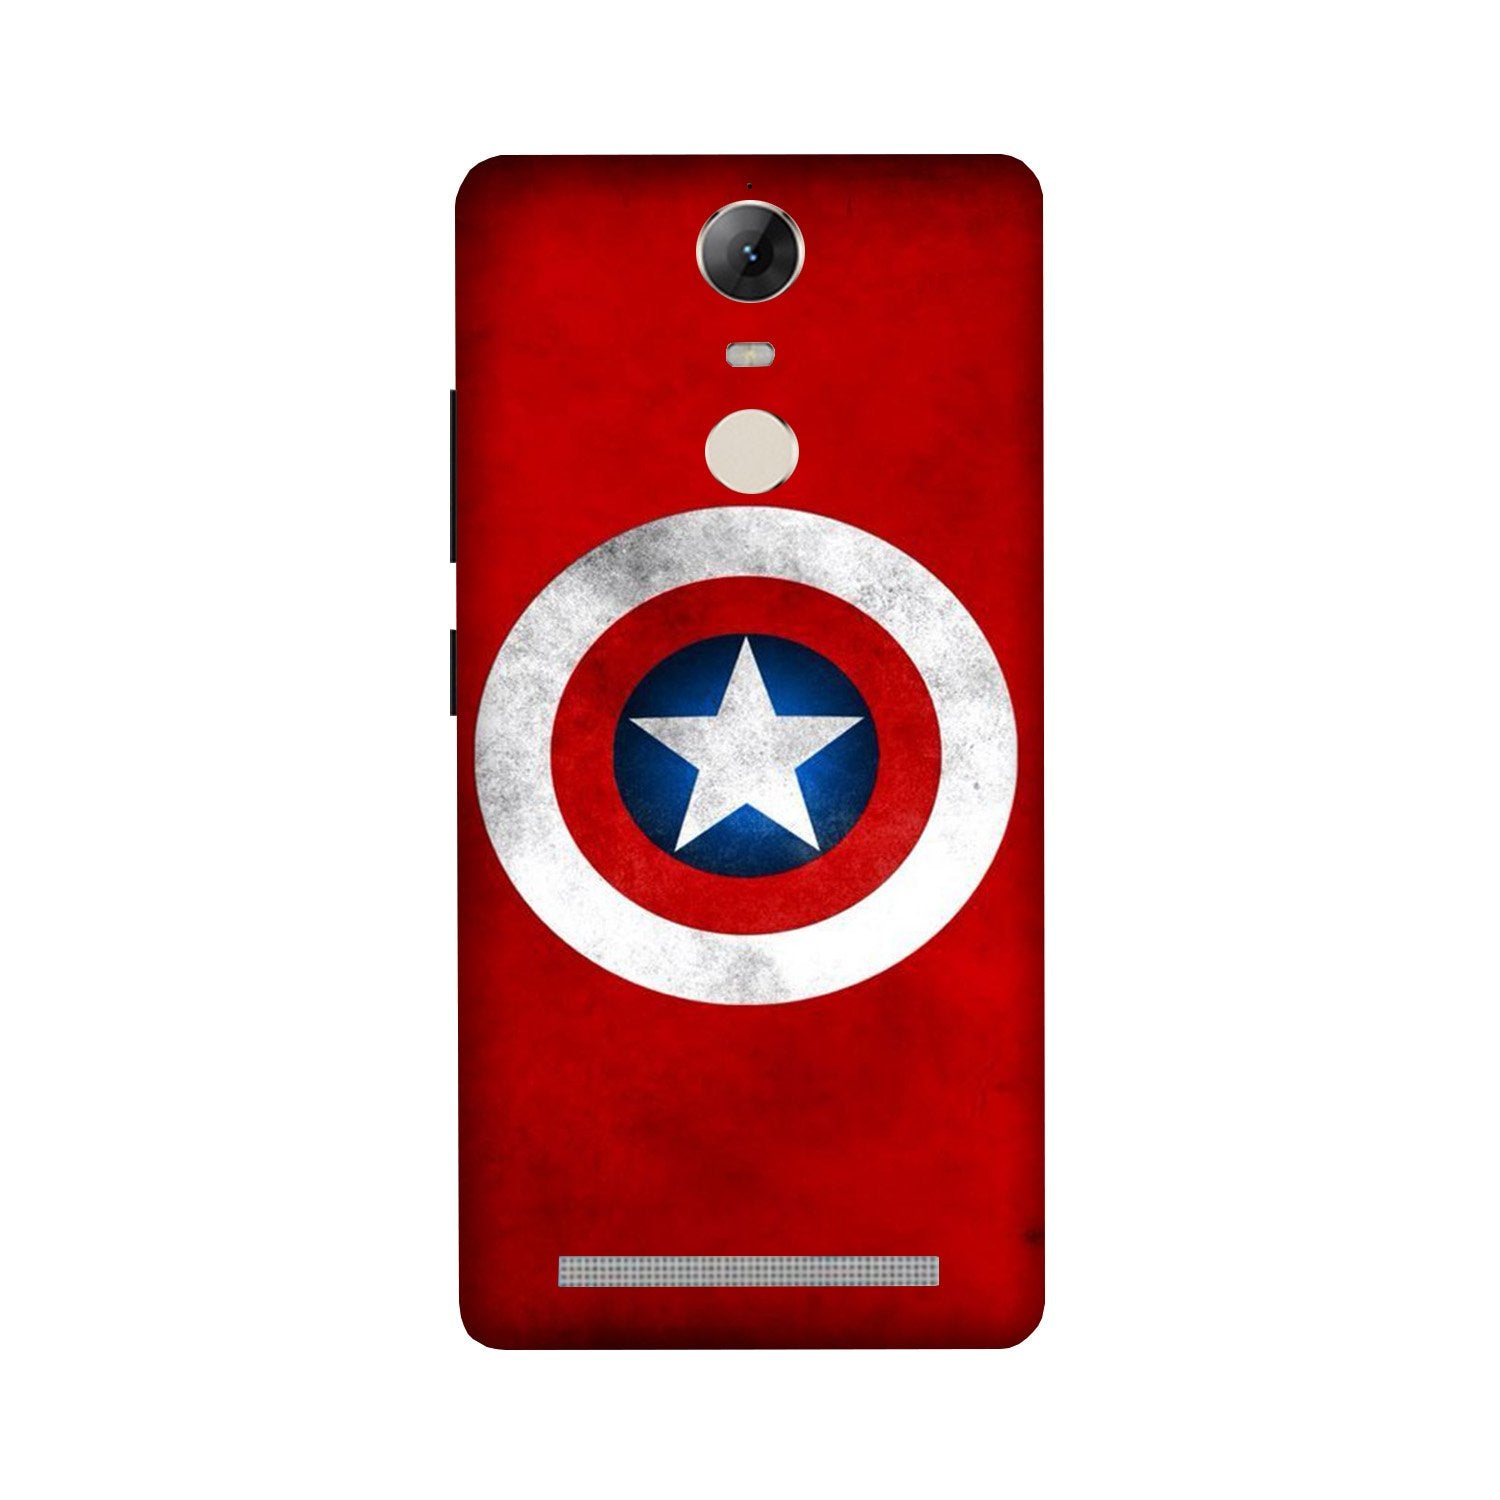 Captain America Case for Lenovo Vibe K5 Note (Design No. 249)